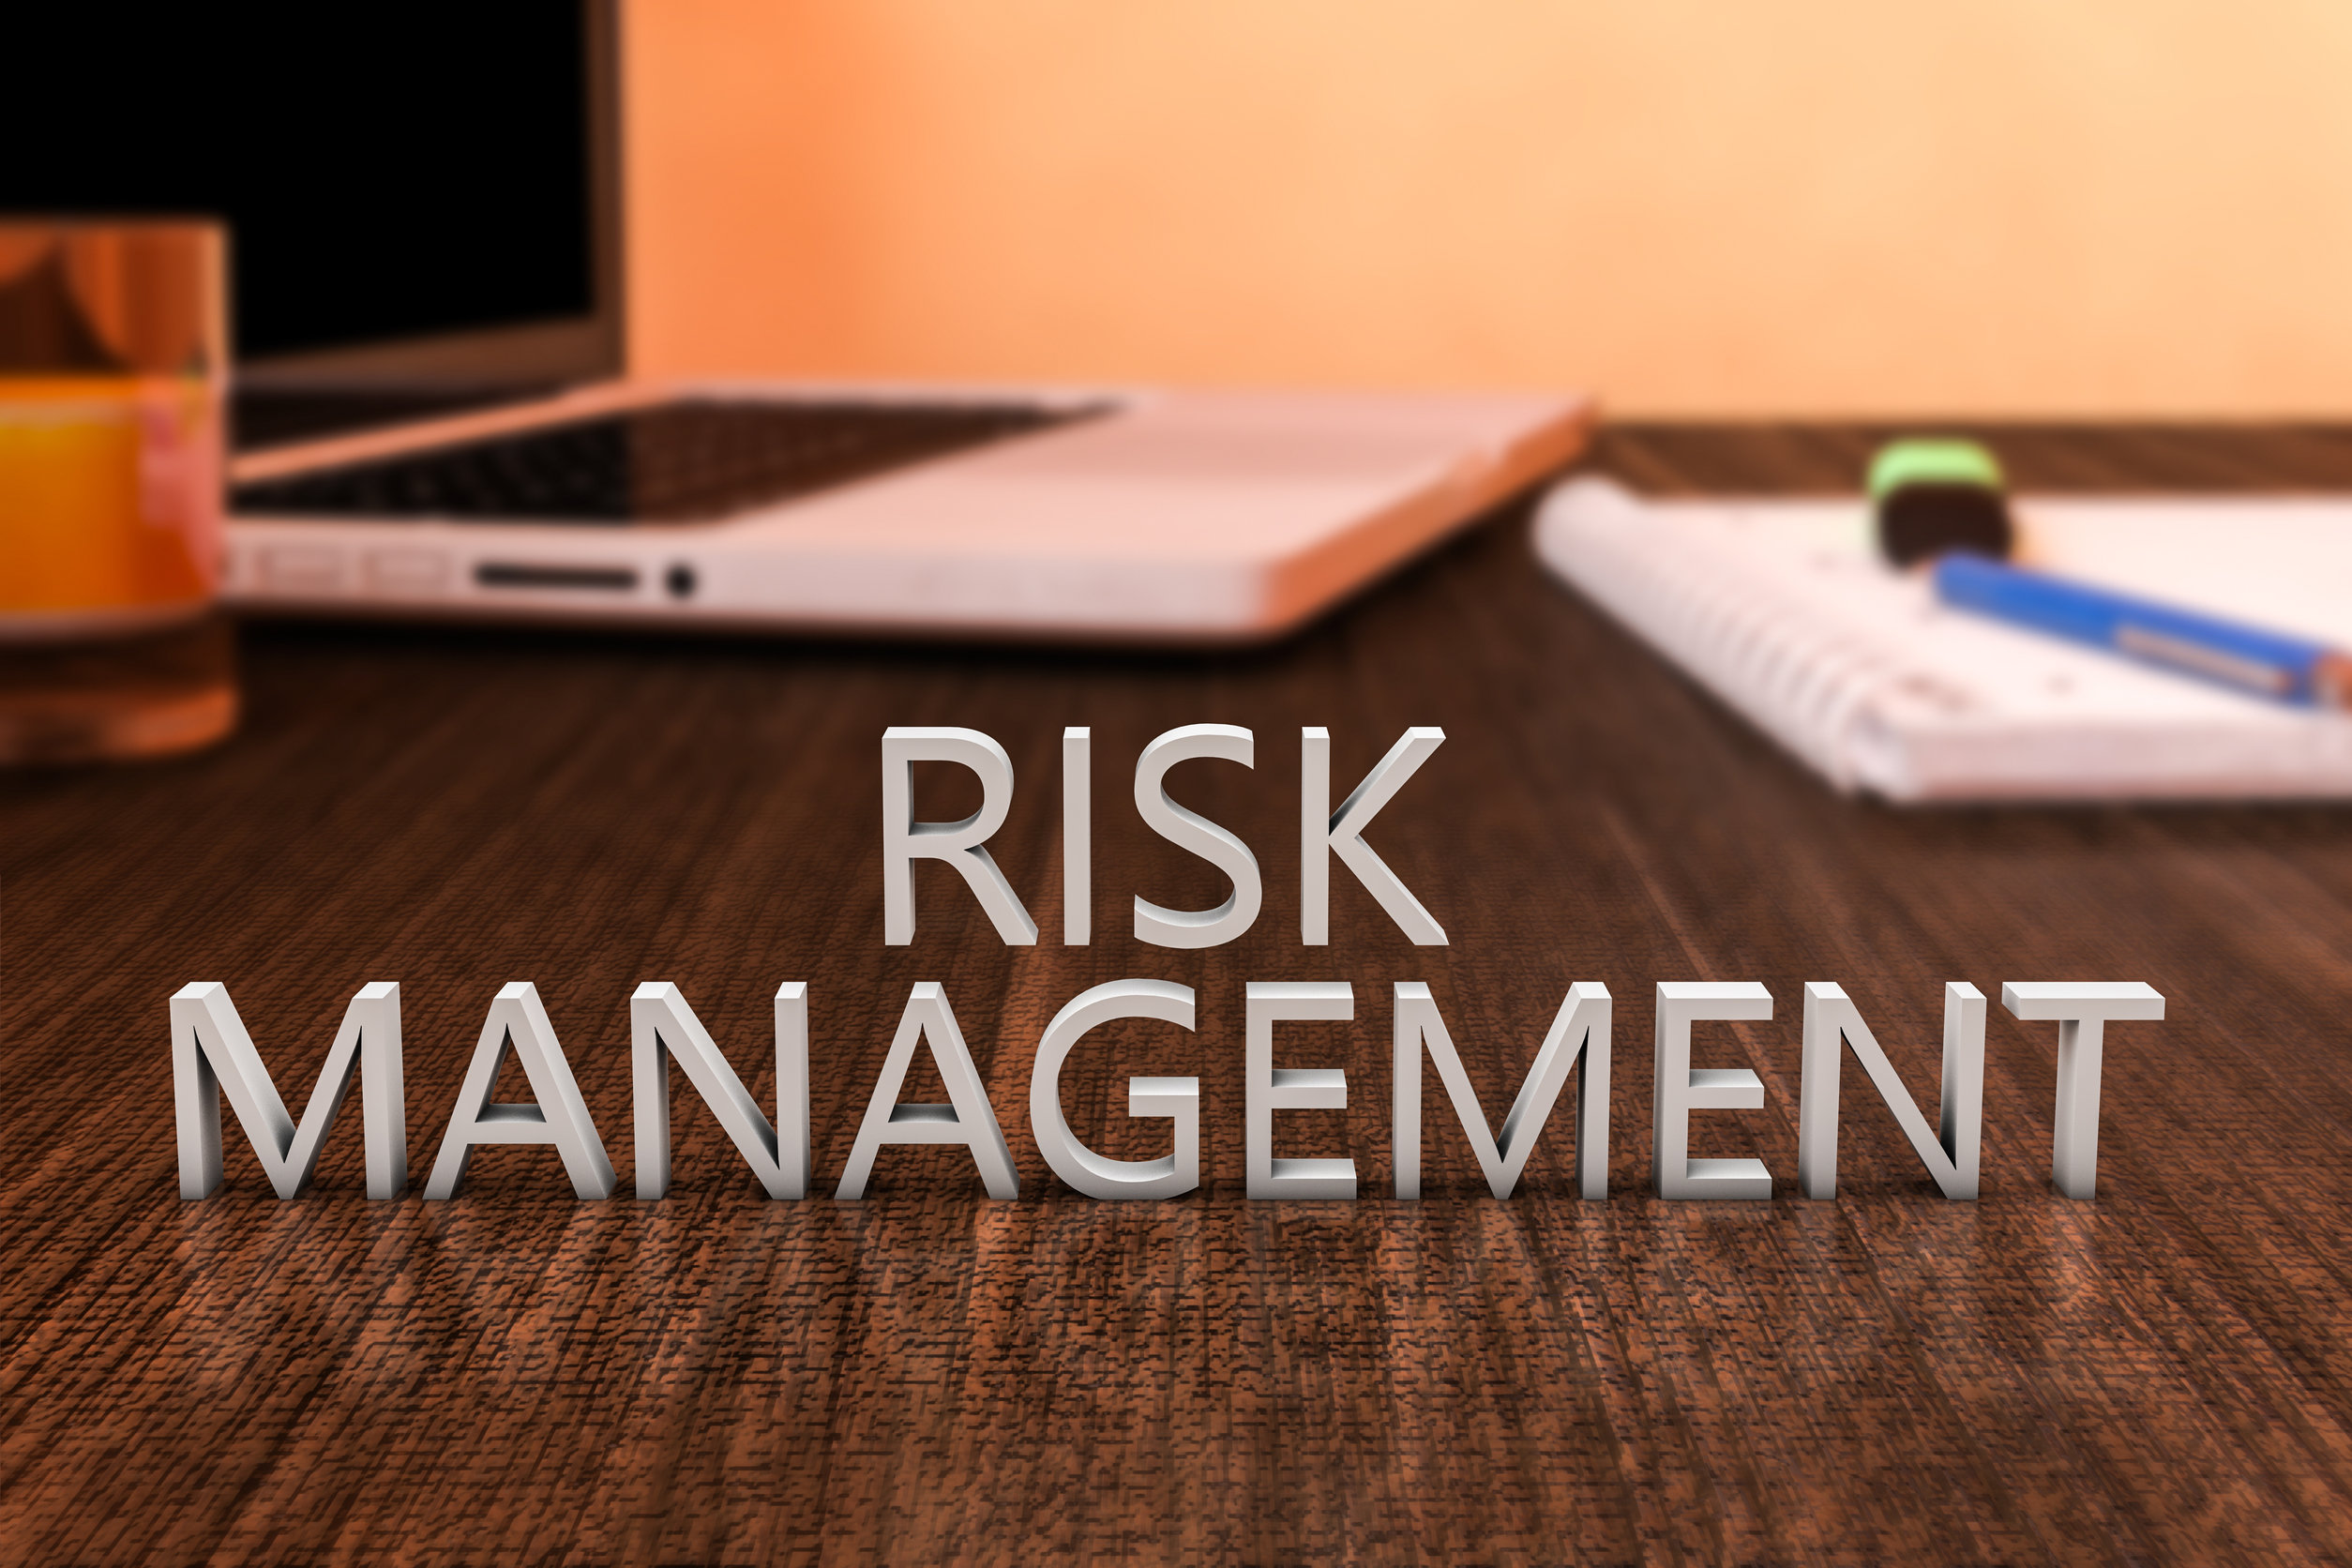 Risk Management - letters on wooden desk with laptop computer and a notebook. 3d render illustration.